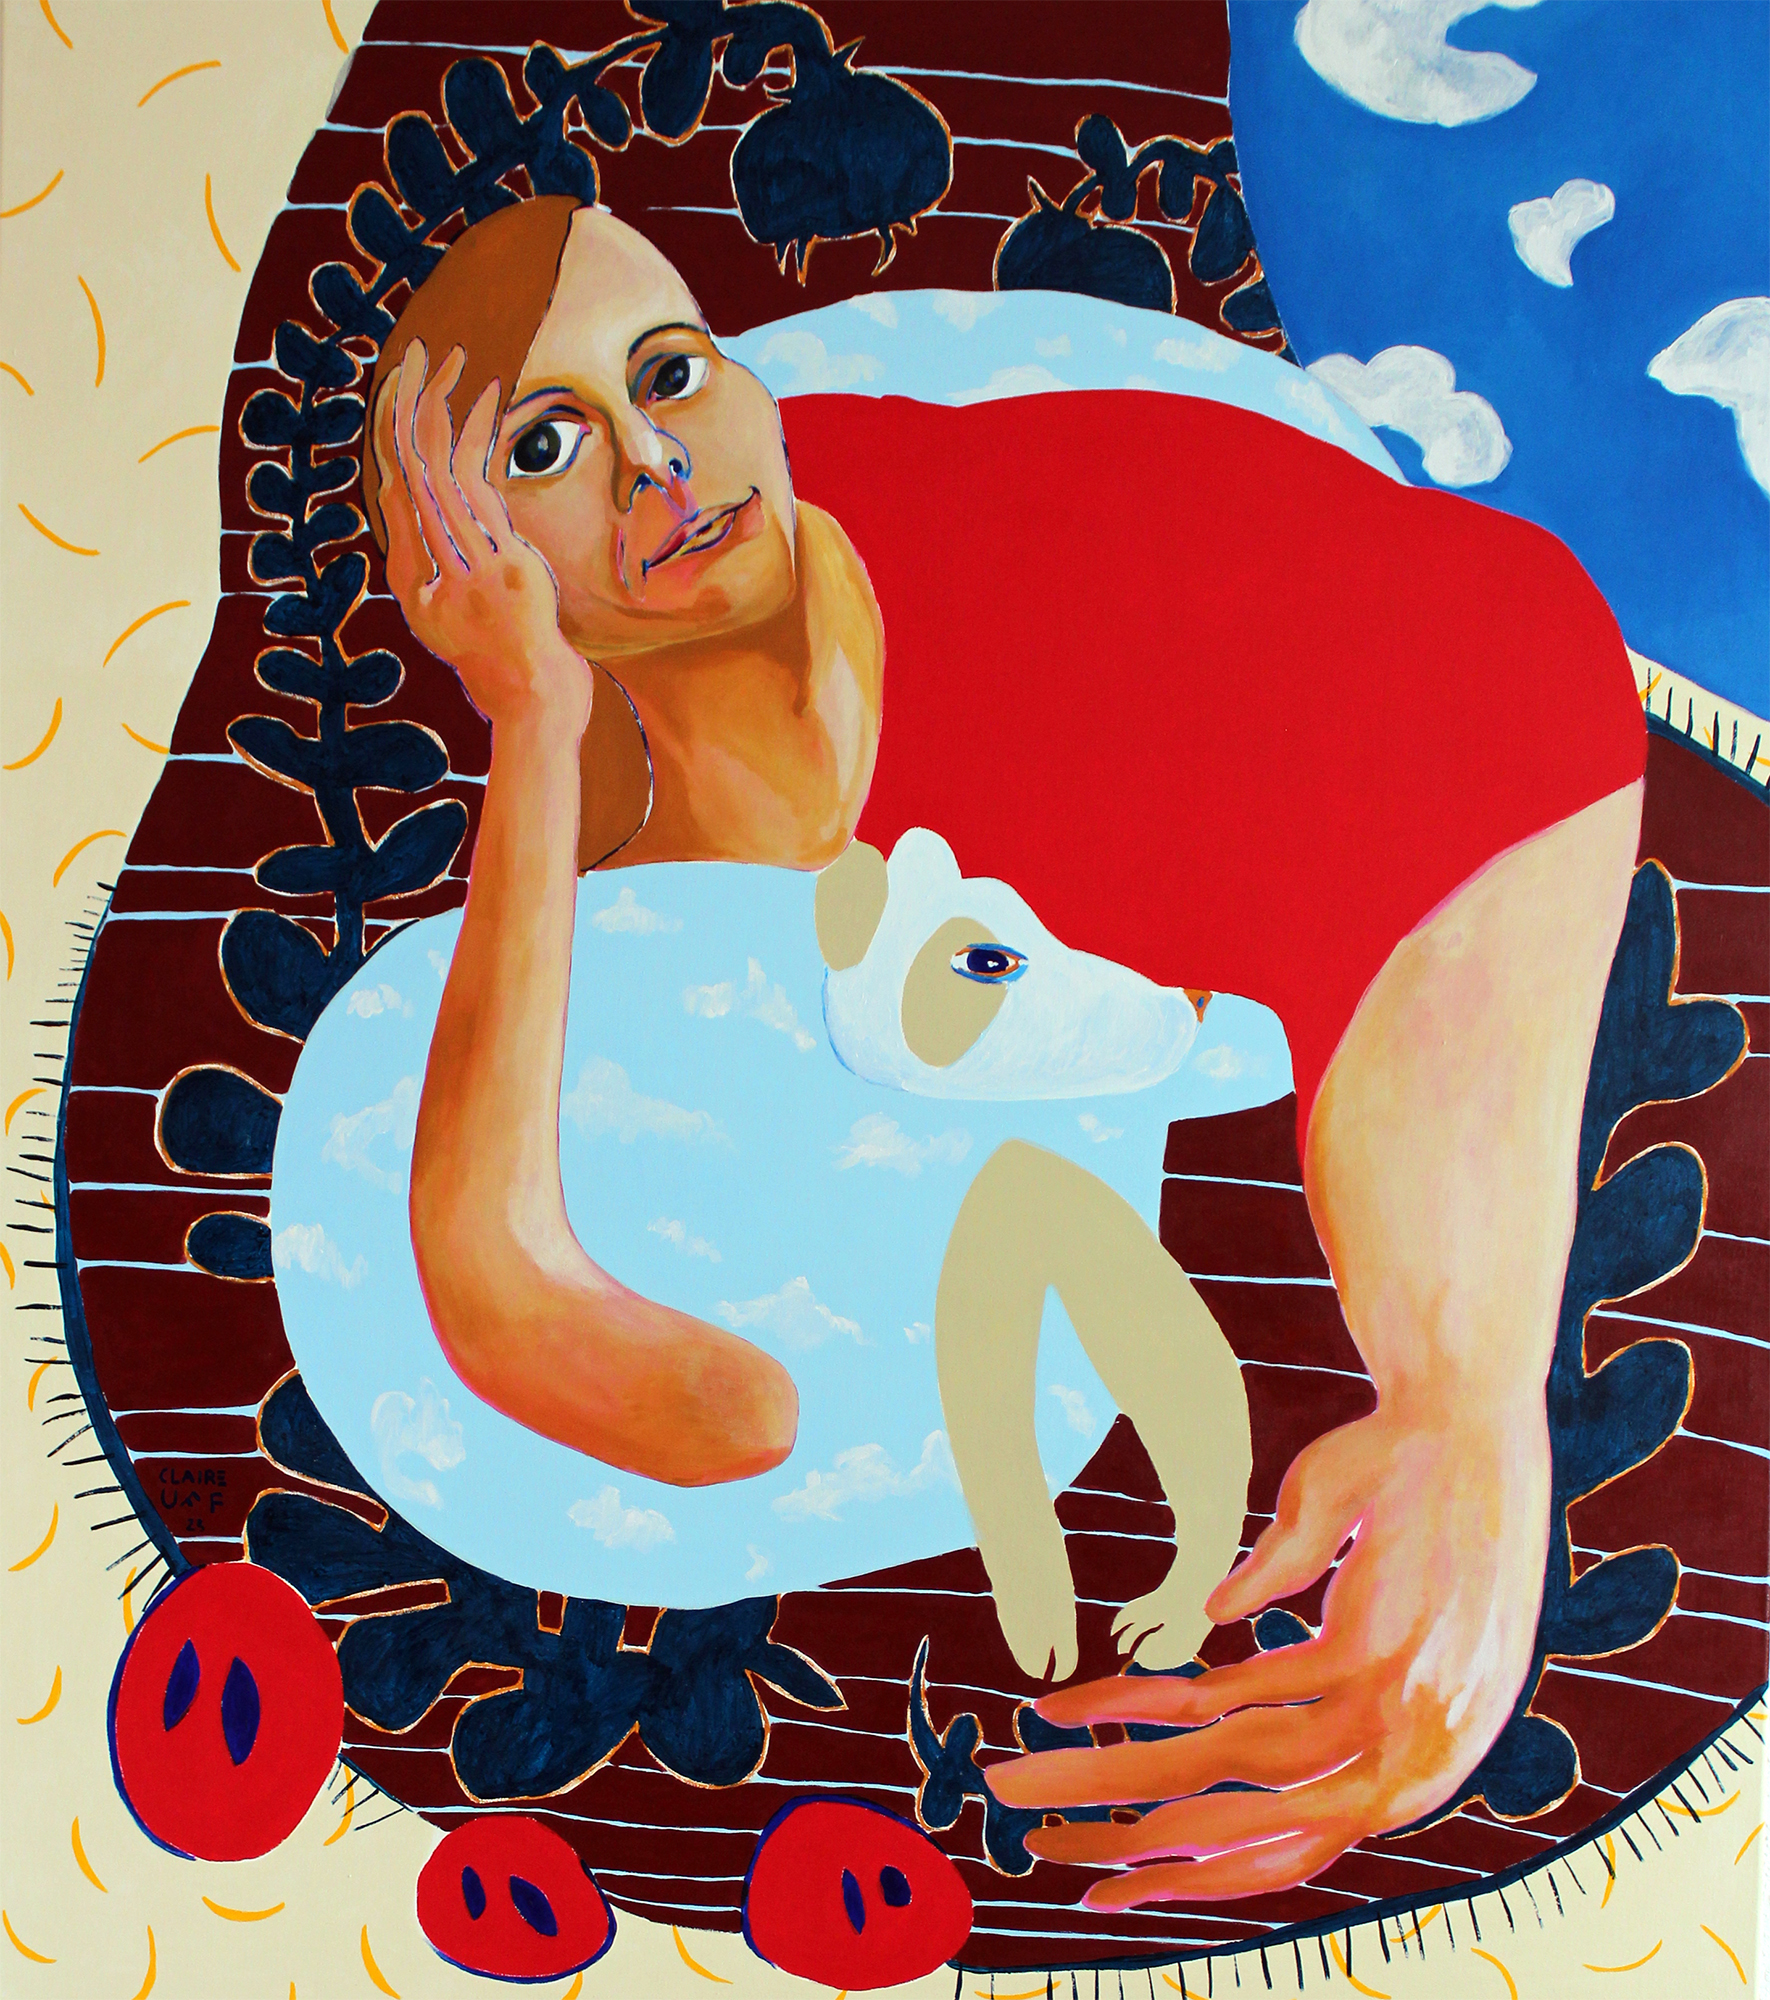 Laura und Nuki / Claire Uff / contemporarypainting / art / berlin artist / painting / Muster / Portrait / contemporaryart /Malerei / Tanz / dance / See / lake / Blau / blue / Freude / Rot / red